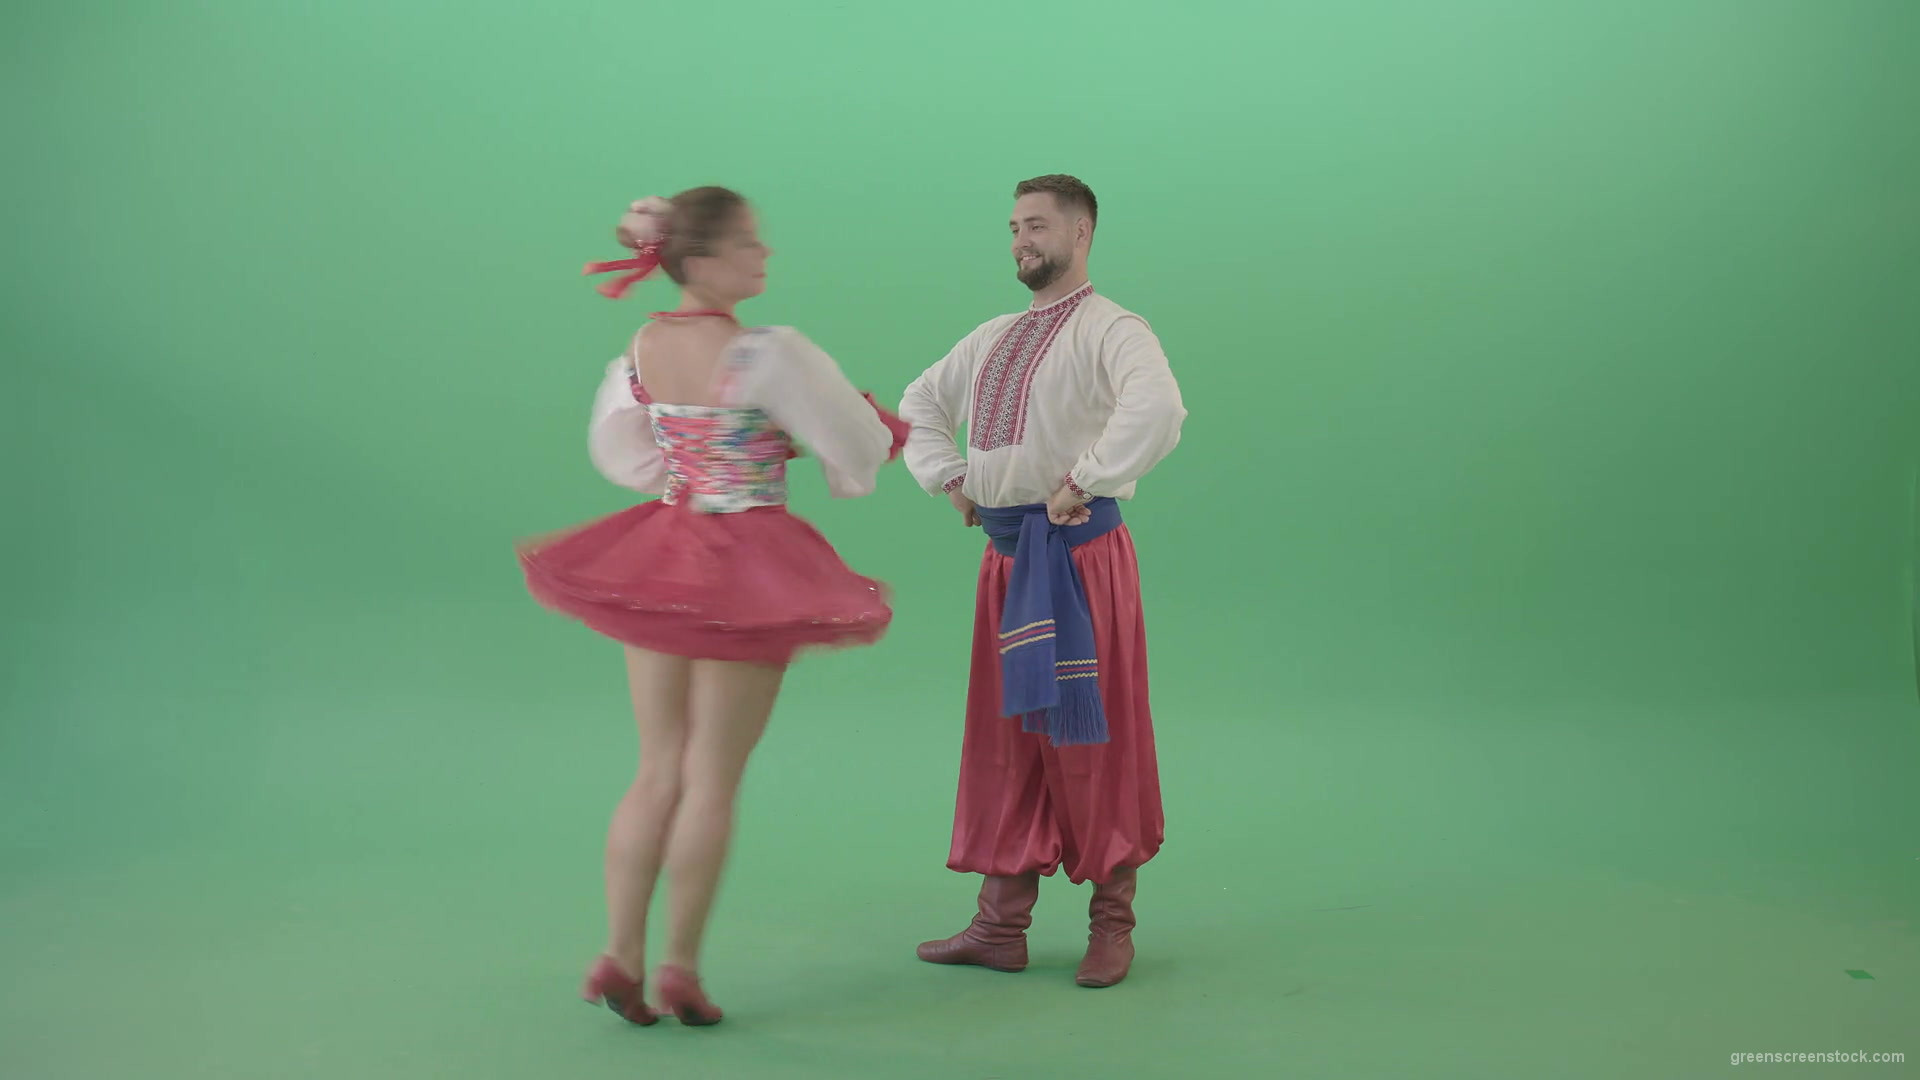 Folk-dance-Polka-in-Ukraine-national-dacing-couple-isolated-on-Green-Screen-4K-Video-Footage-1920_009 Green Screen Stock